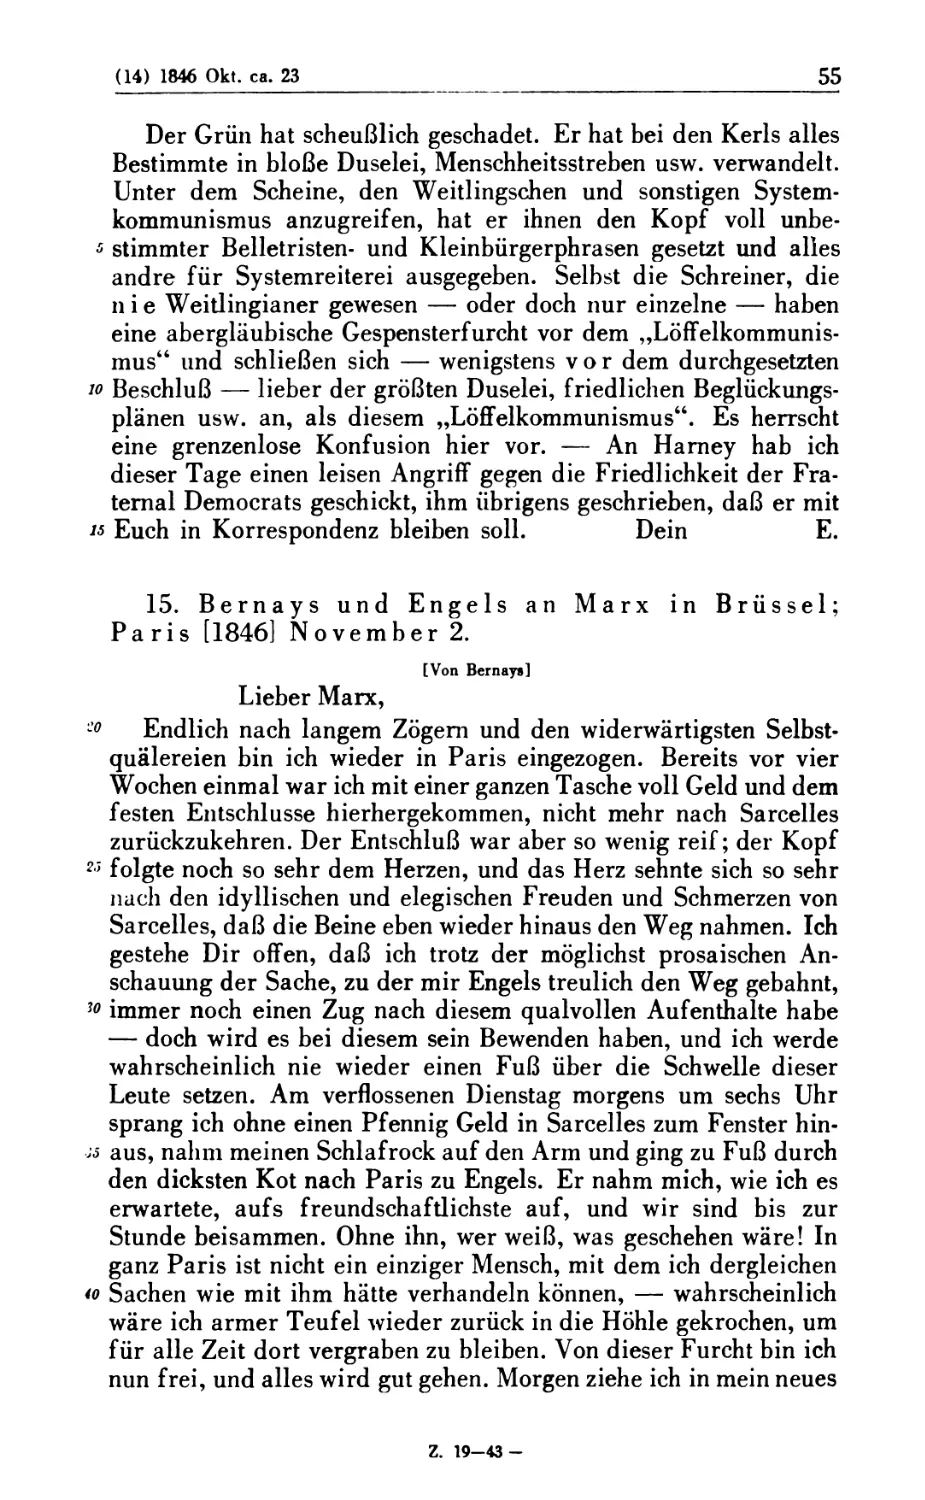 15. Bernays und Engels an Marx in Brüssel; Paris [1846] November 2